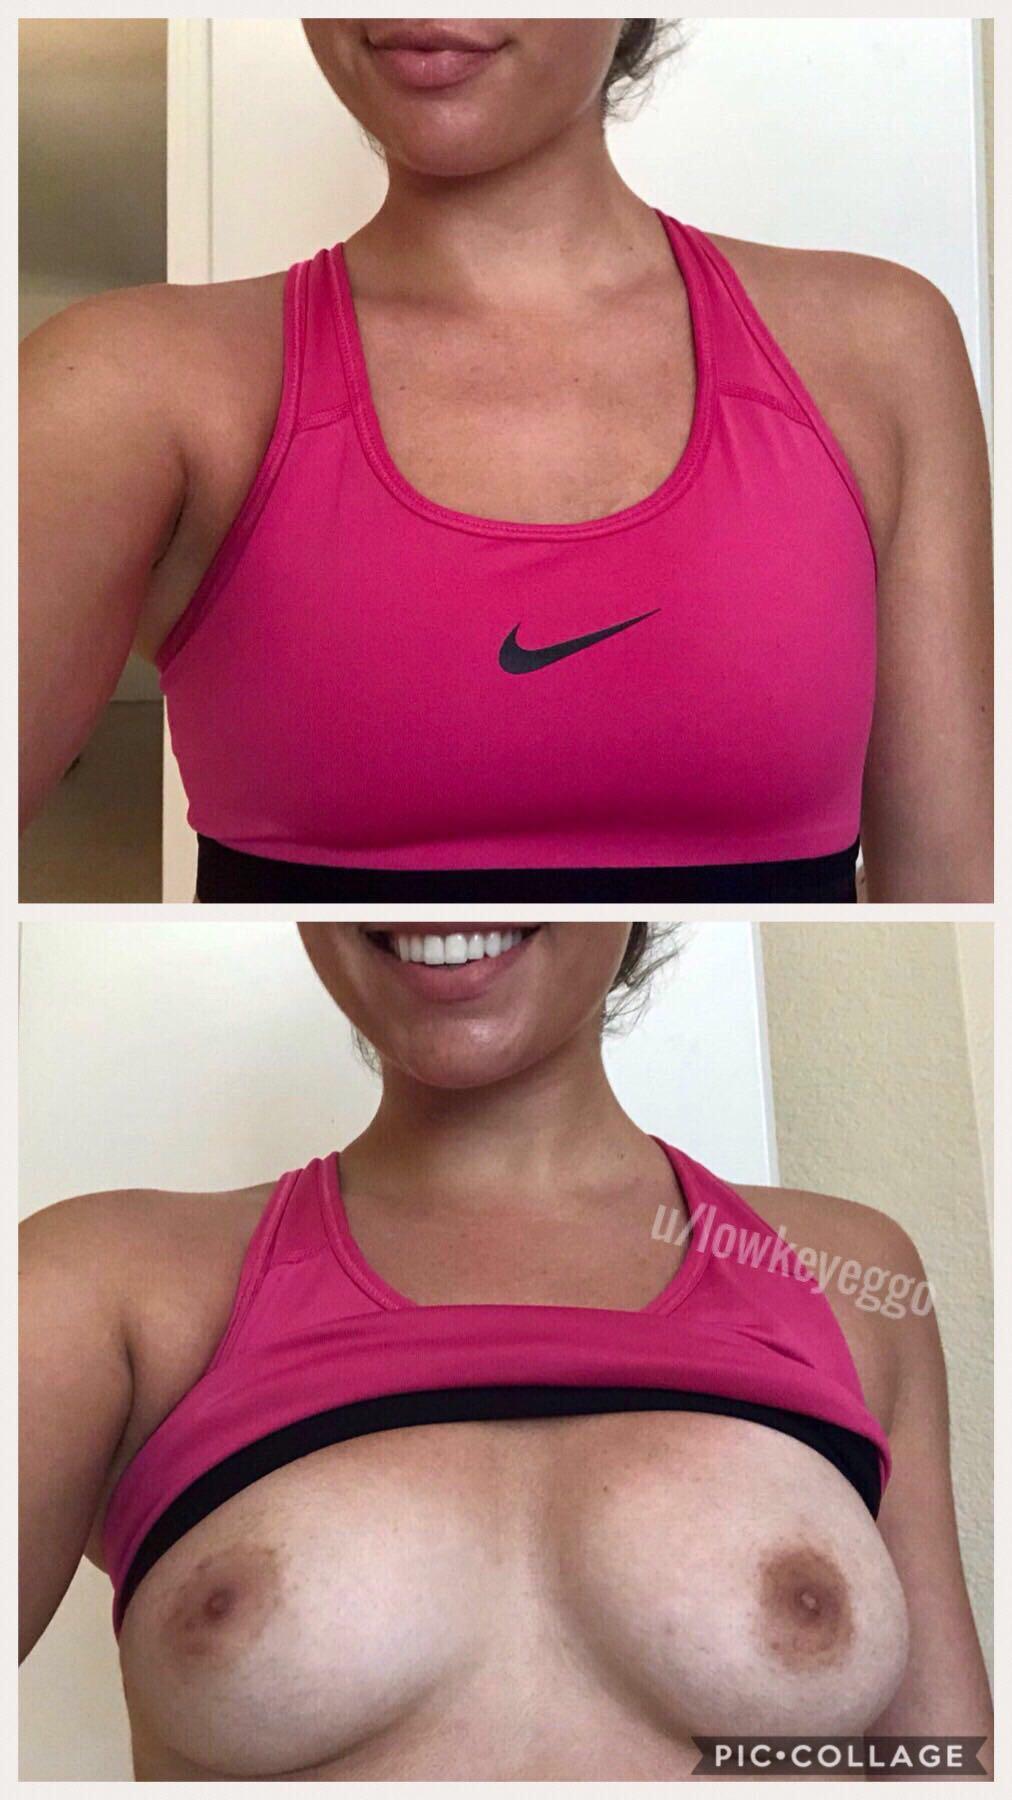 this sports bra hides em nicely (on/o[f]f)